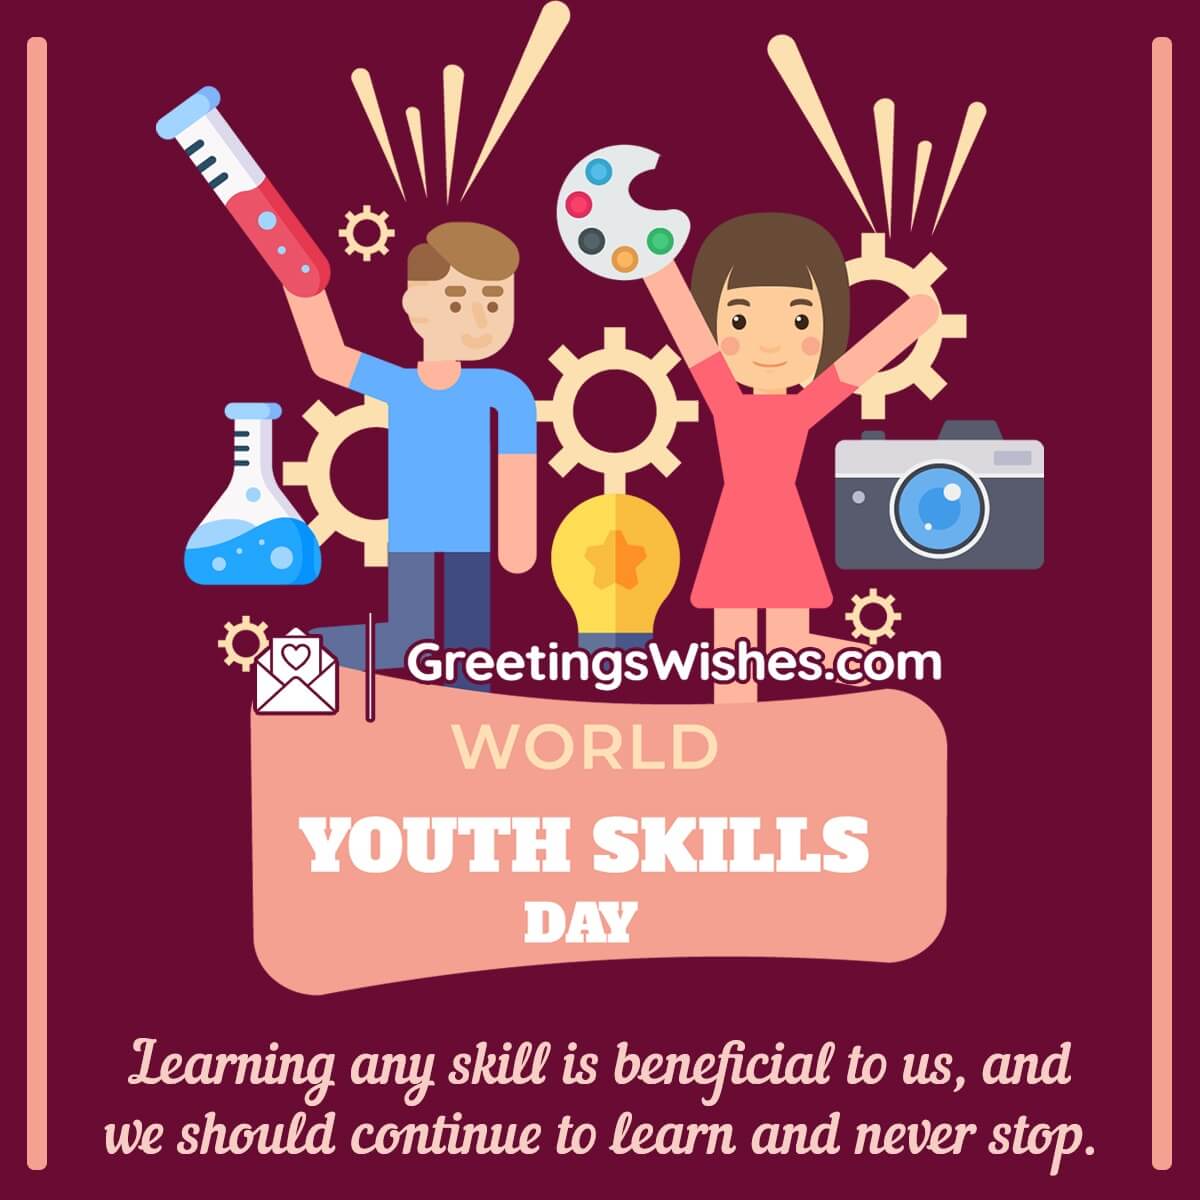 World Youth Skills Day Image